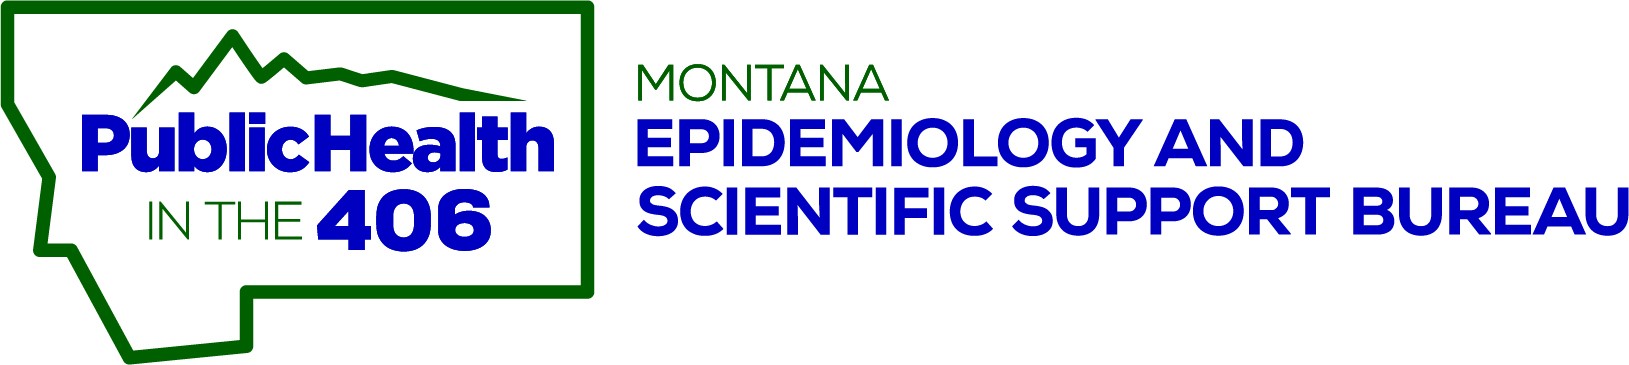 Montana Epidemiology and Scientific Bureau